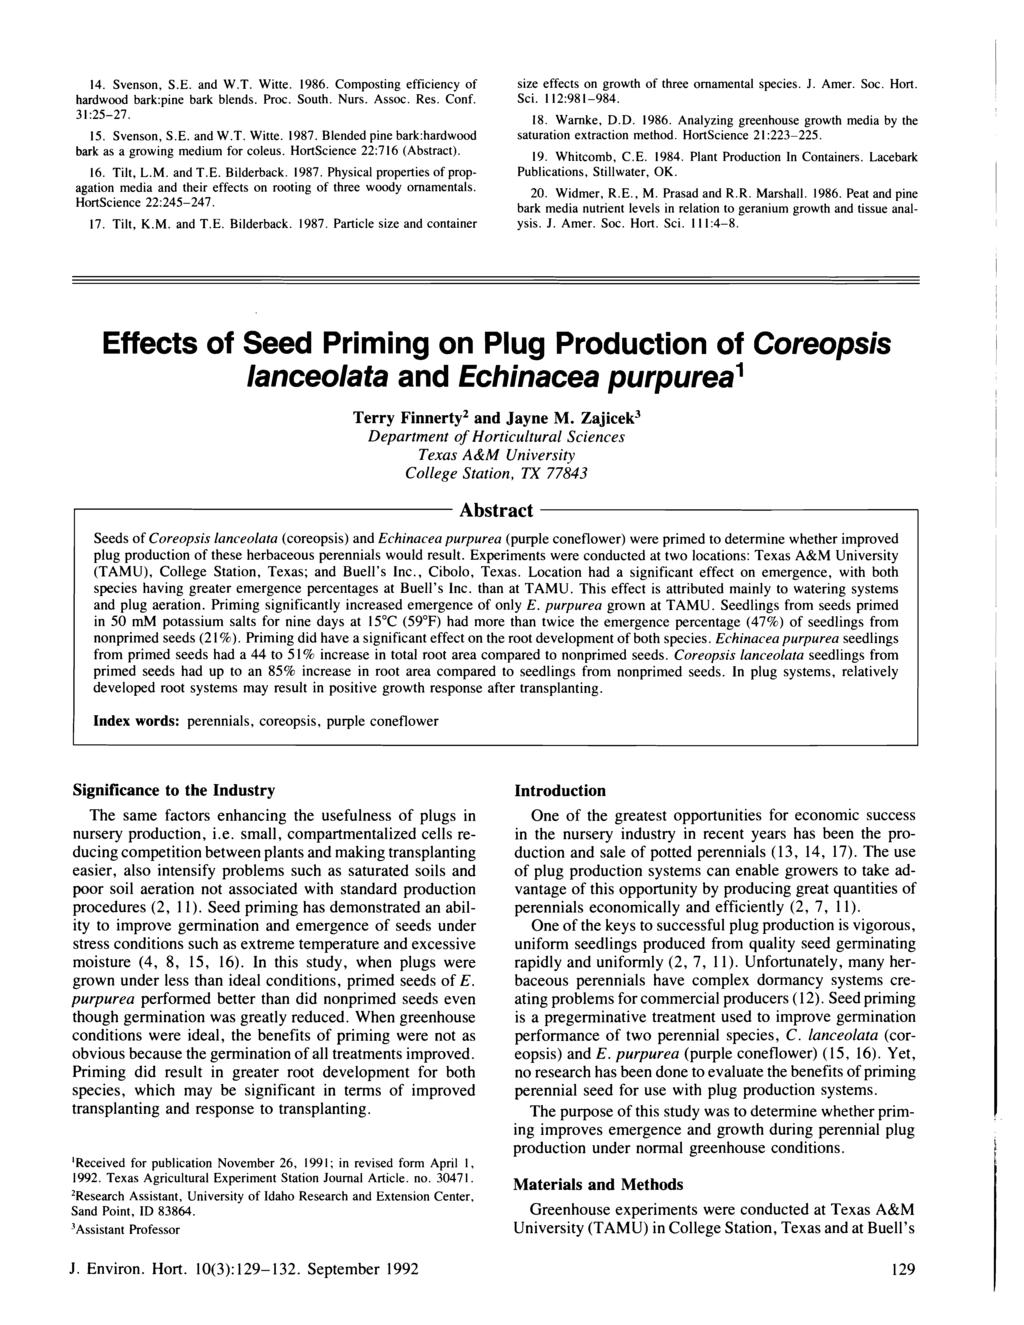 14. Svenson, S.E. and W.T. Witte. 1986. Composting efficiency of hardwood bark:pine bark blends. Proc. South. Nurs. Assoc. Res. Conf. 31:25-27. 15. Svenson, S.E. and W.T. Witte. 1987.